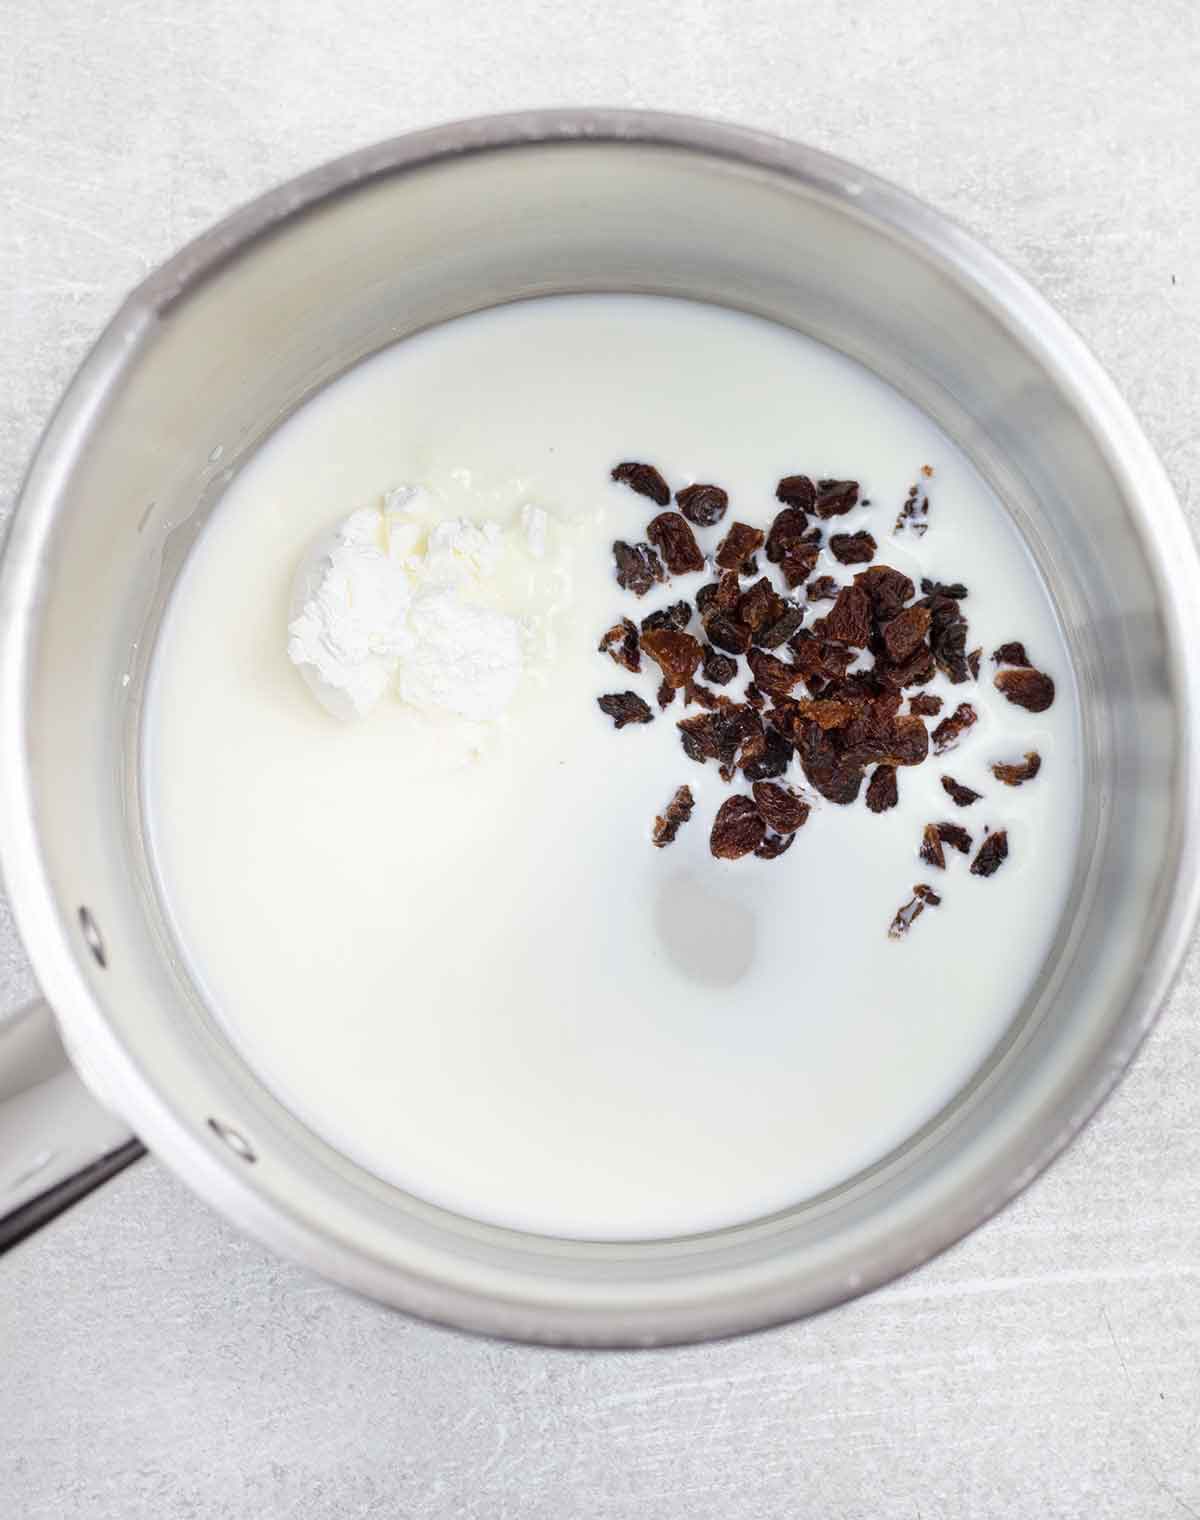 Mix milk, cornstarch, sugar, raisins and vanilla extract in a small saucepan.